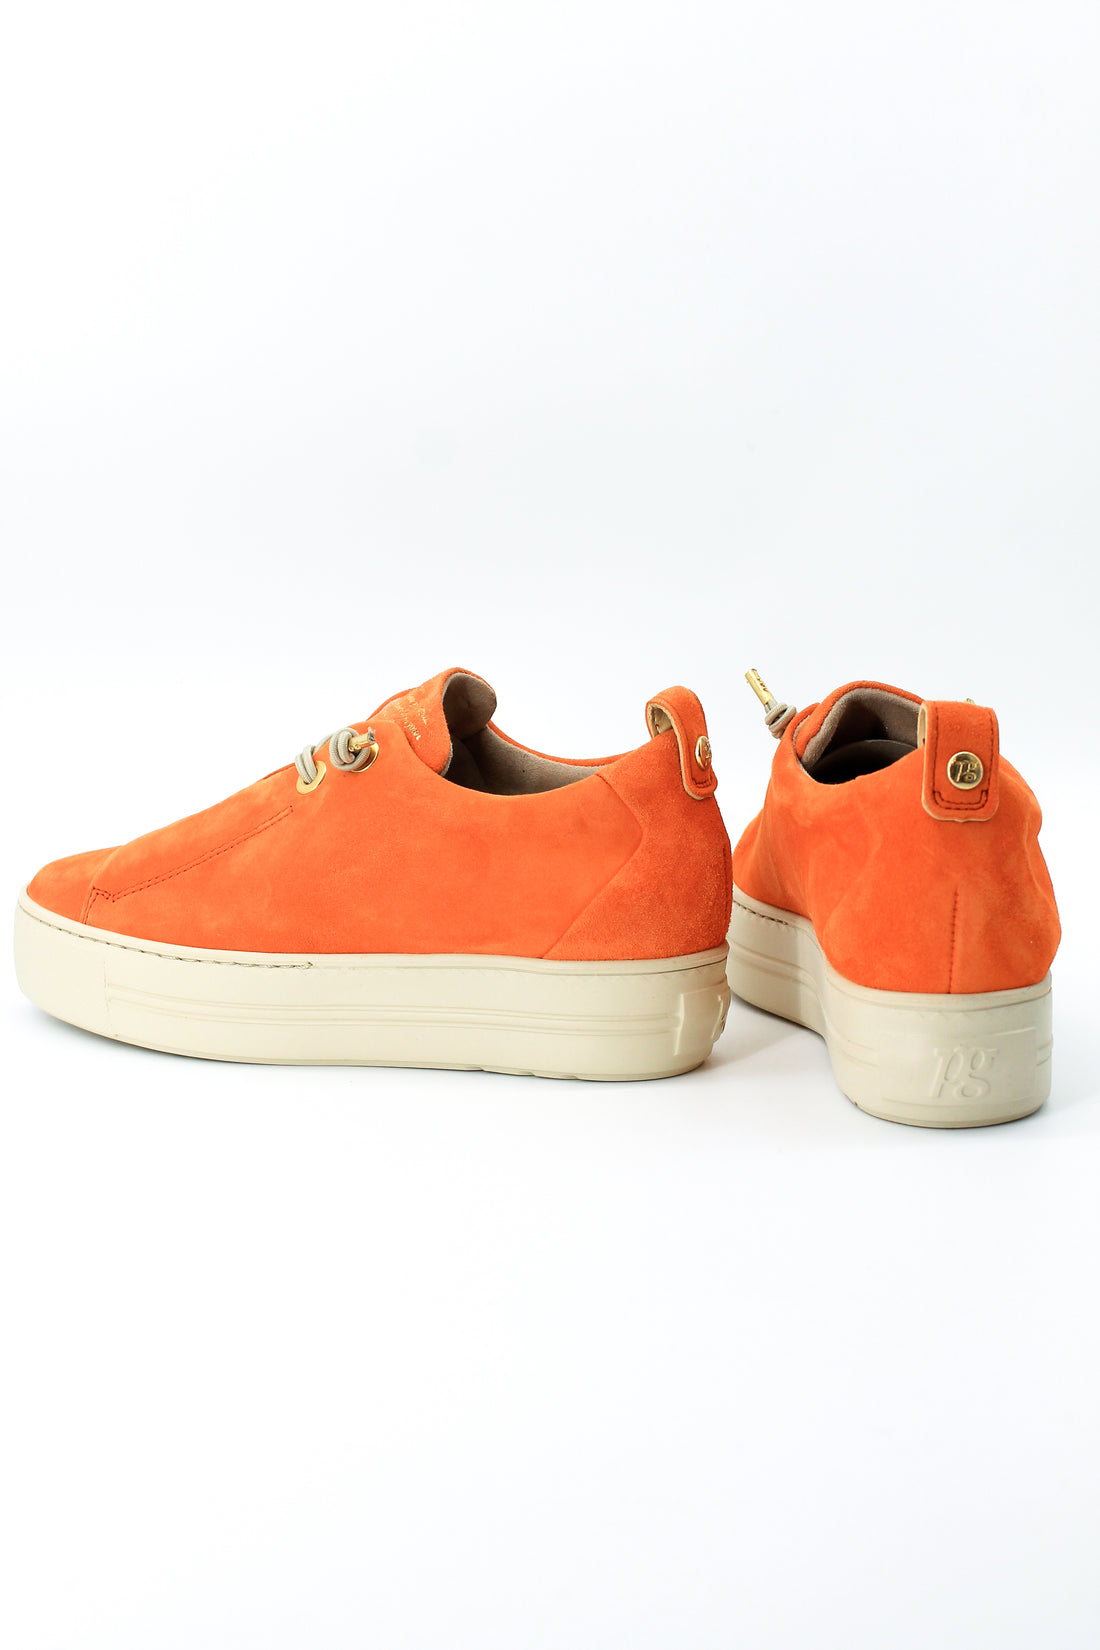 Paul Green 5017 Orange